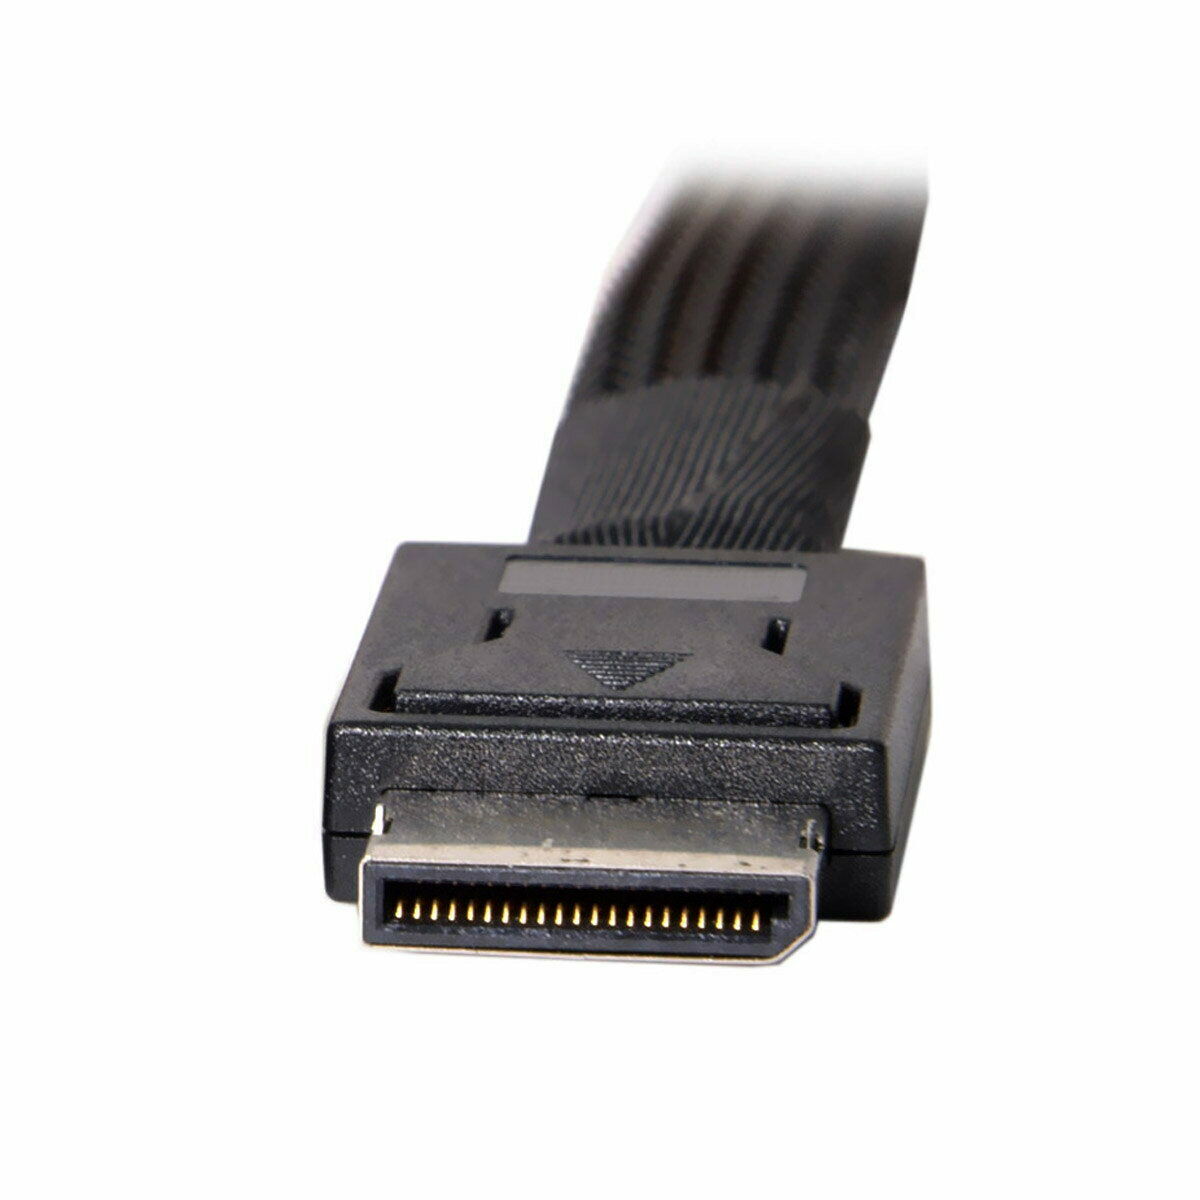 OCuLink PCIe SFF-8611 4i to OCuLink SFF-8611 SSD データアクティブ